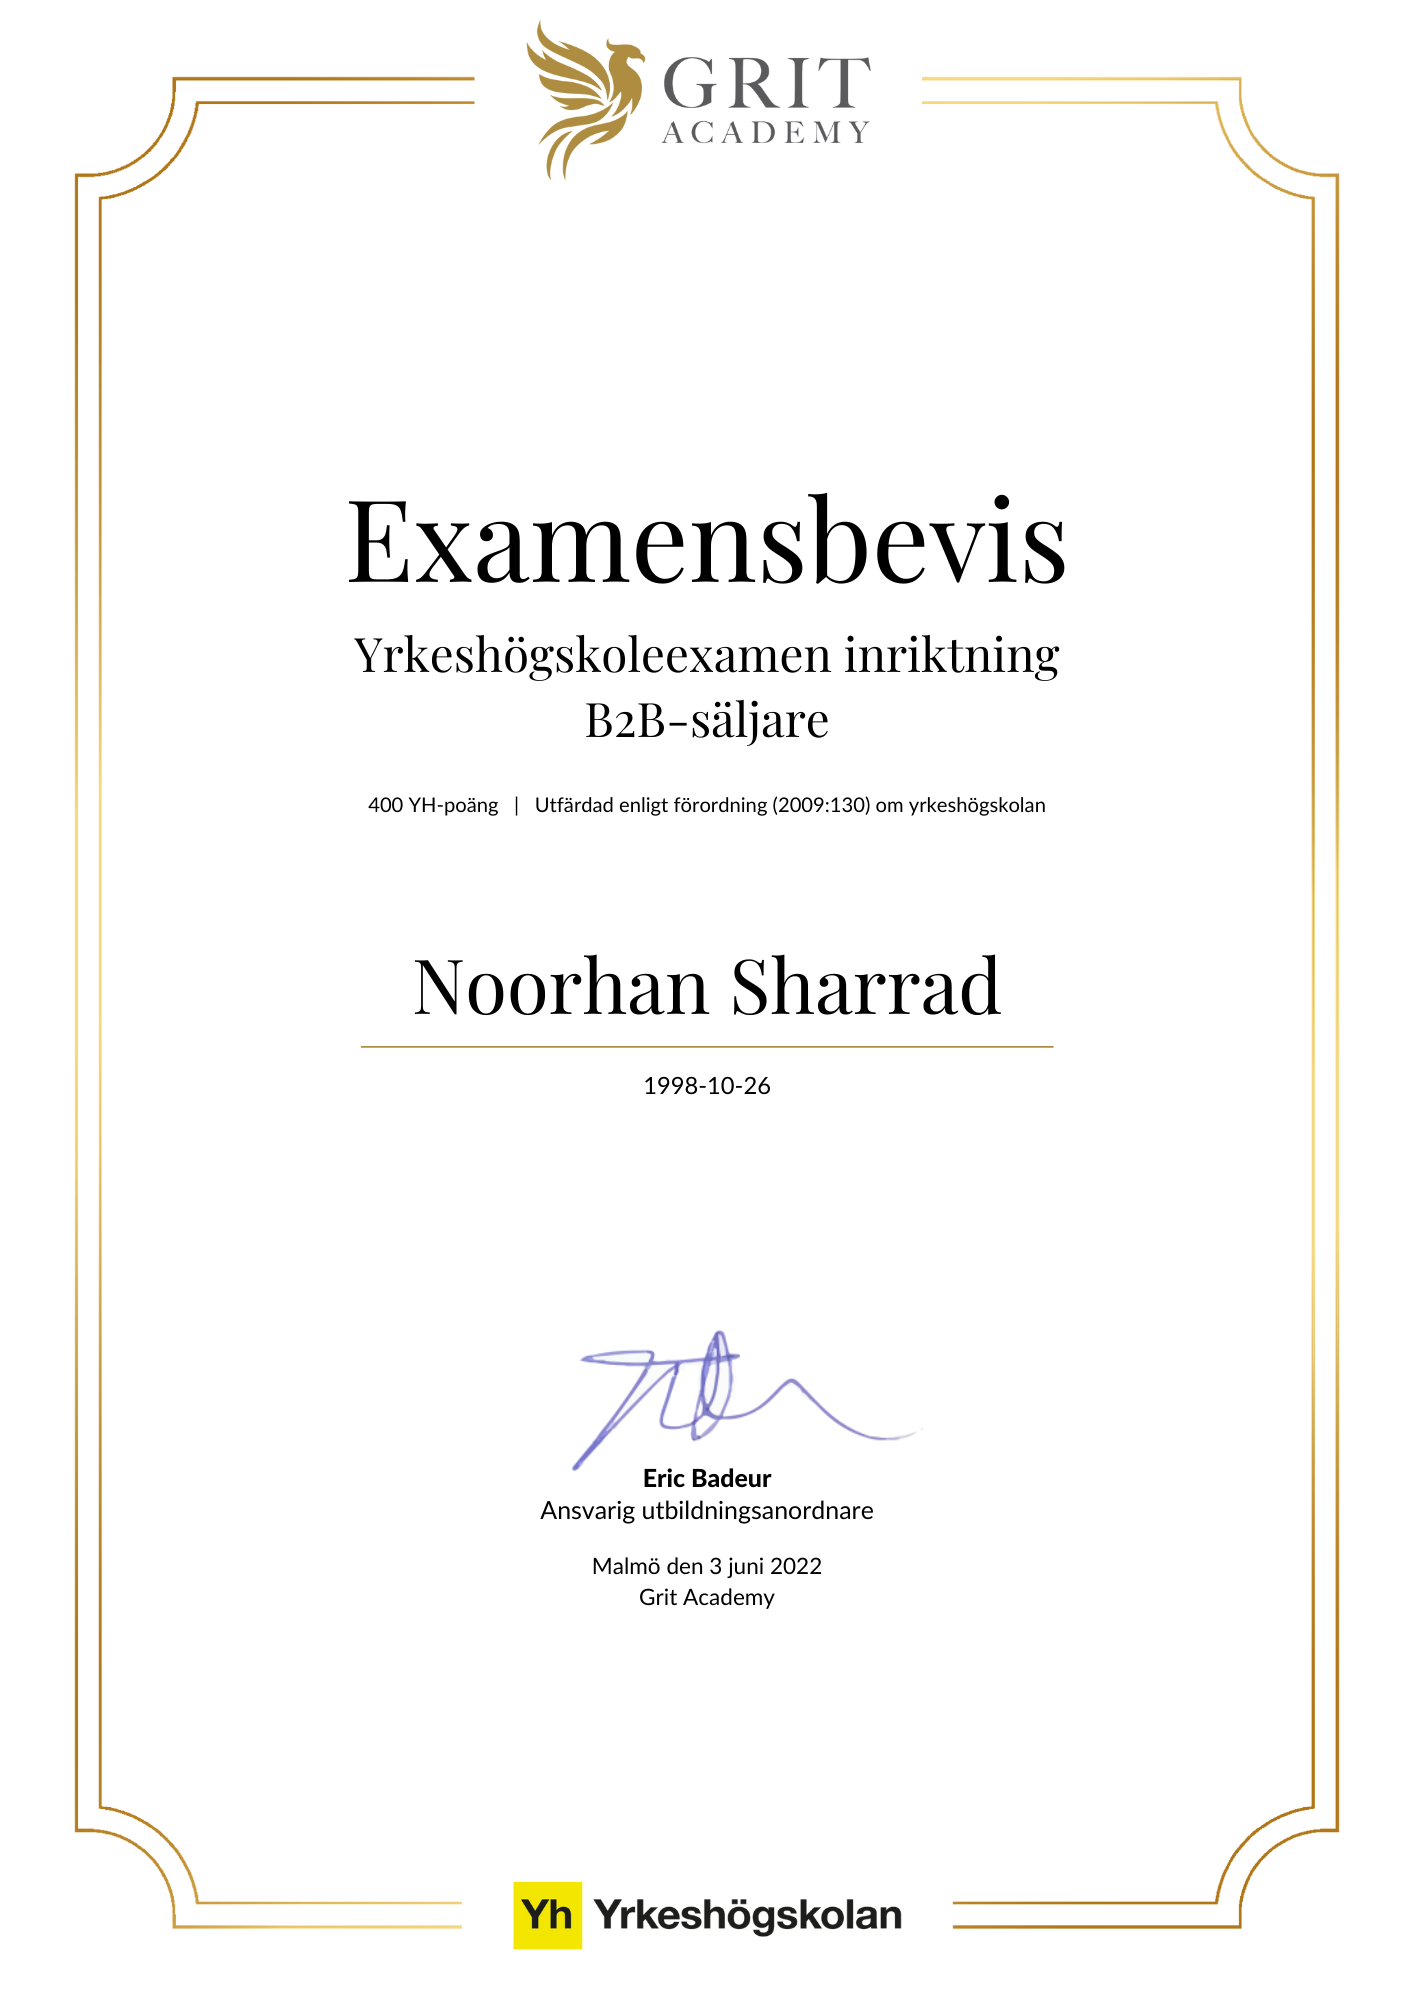 Examensbevis Noorhan Sharrad (4)